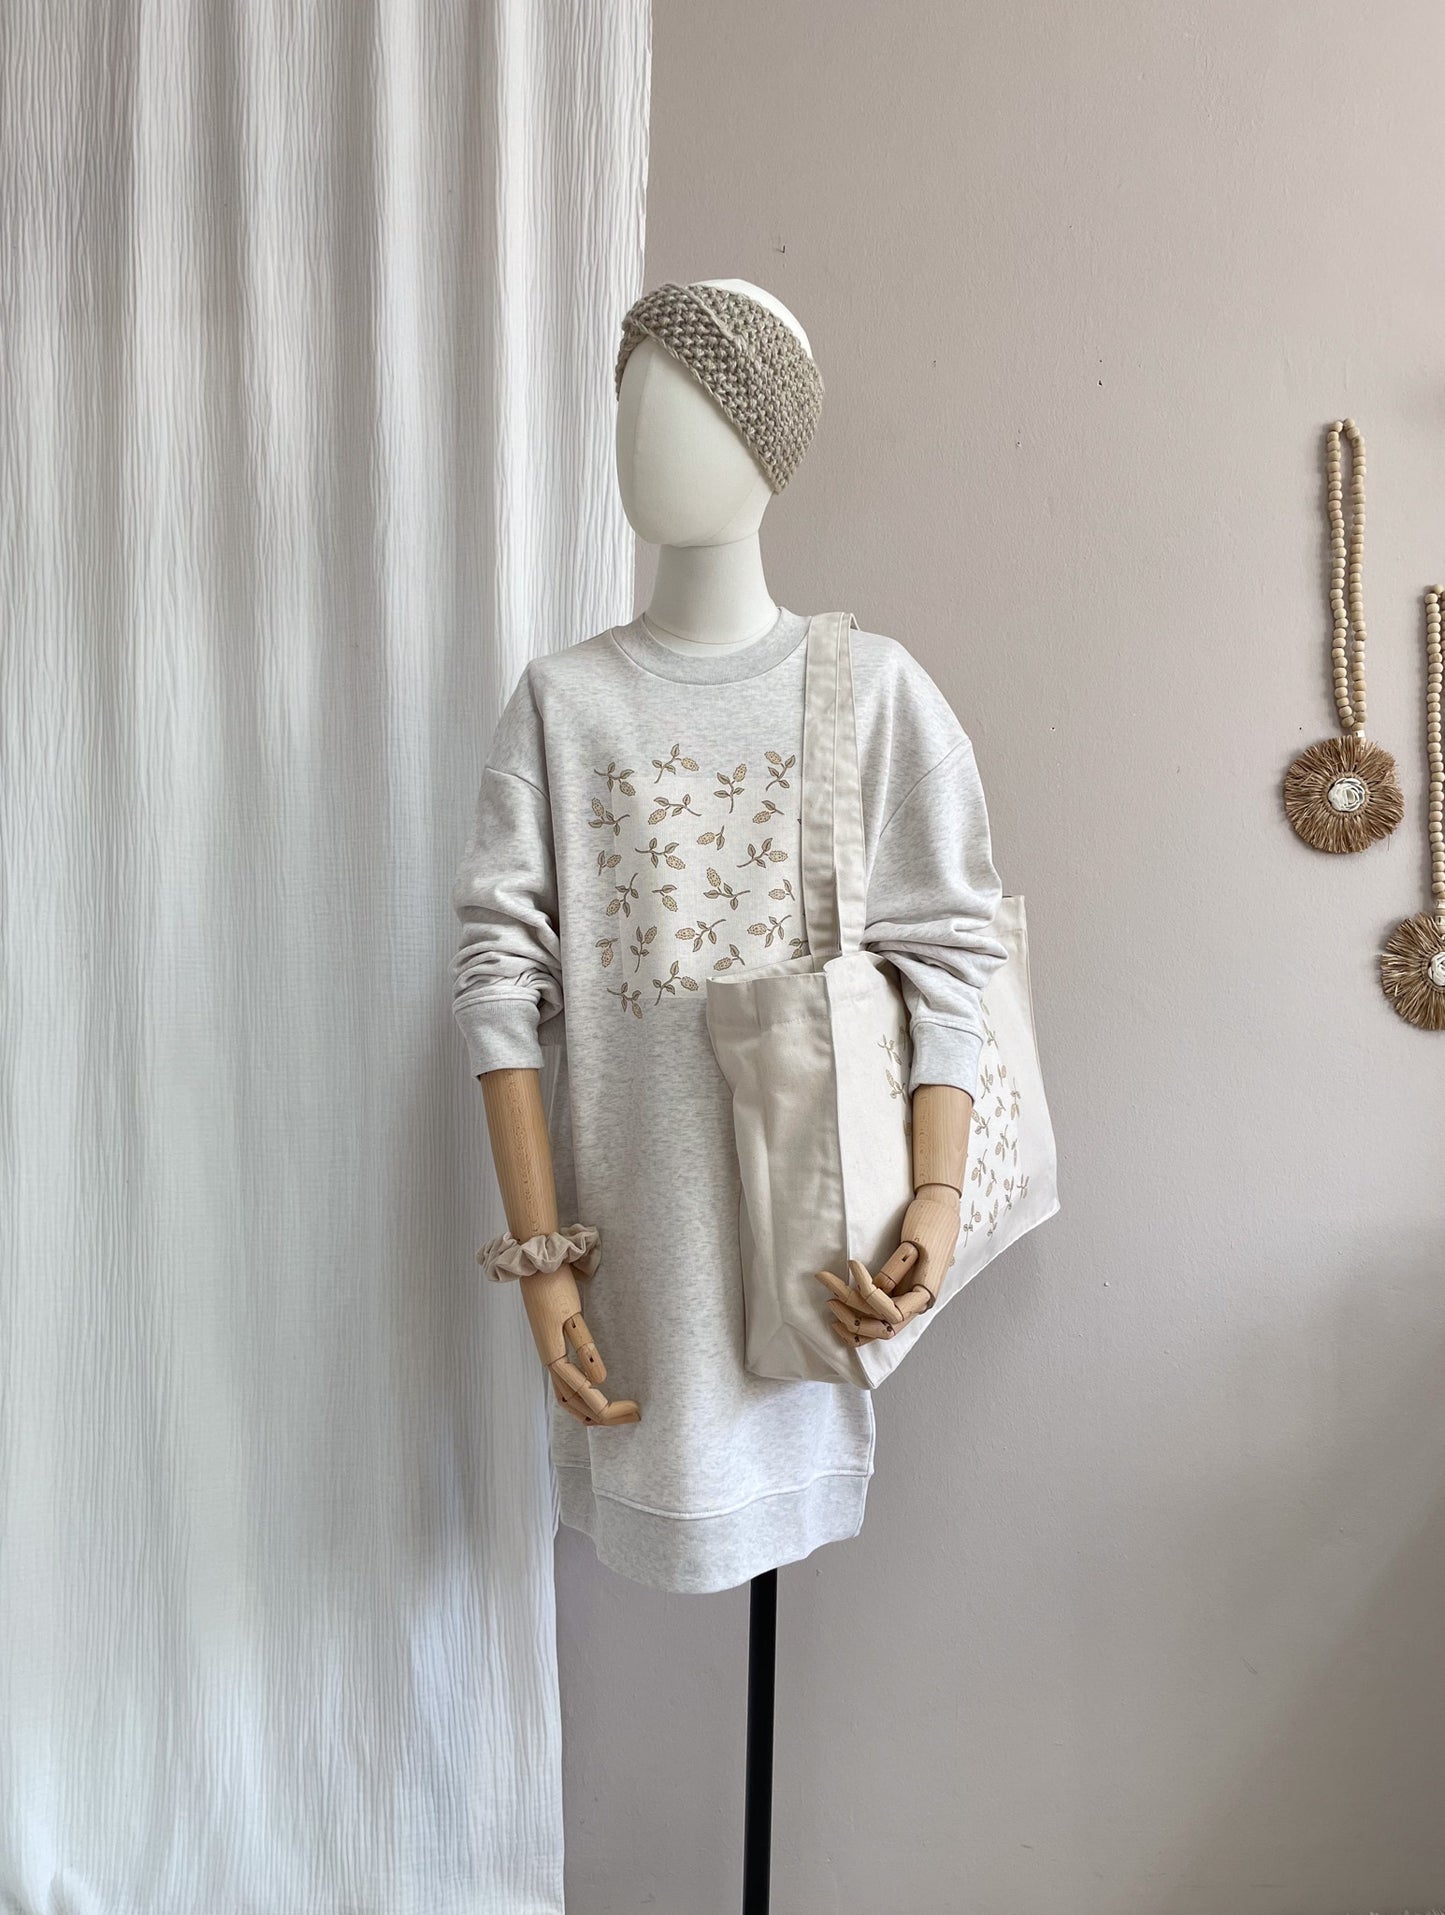 Oversized sweatshirt dress / simple floral / creamy grey